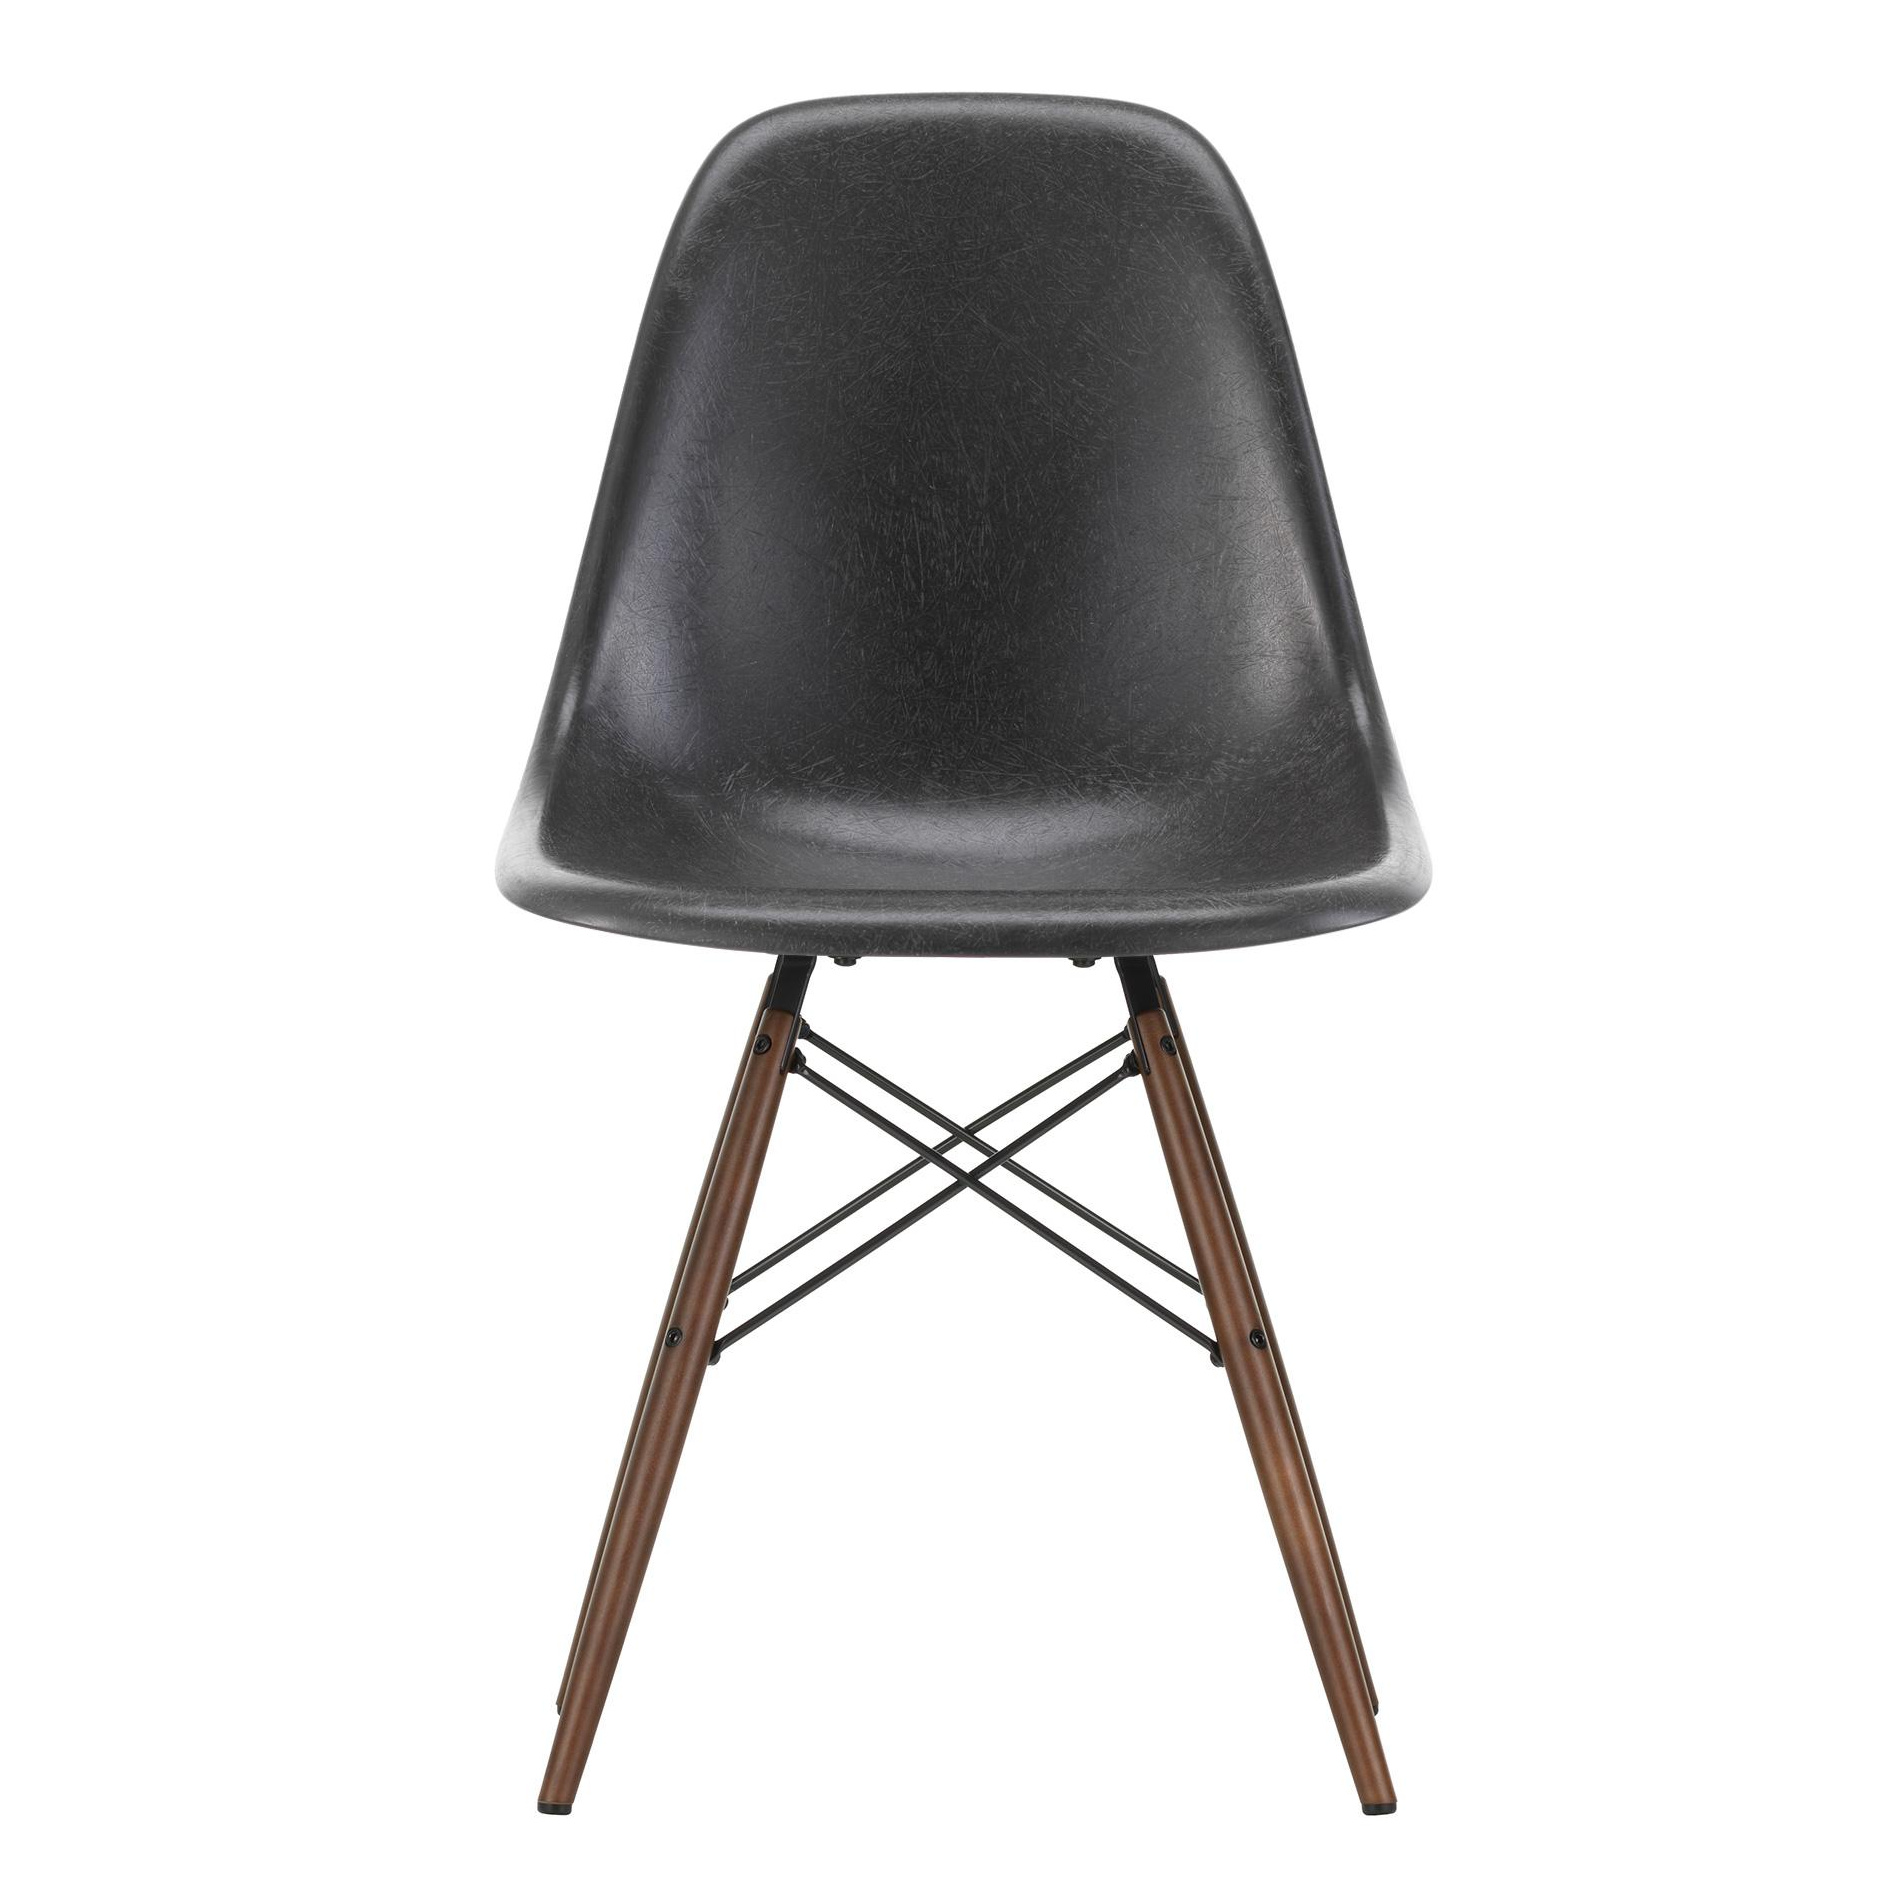 Vitra - Eames Fiberglass Side Chair DSW Ahorn dunkel - Elefantengrau/Sitzschale Fieberglas/Gestell Ahorn dunkel/Stahl schwarz/BxHxT 46,5x83x55cm von Vitra